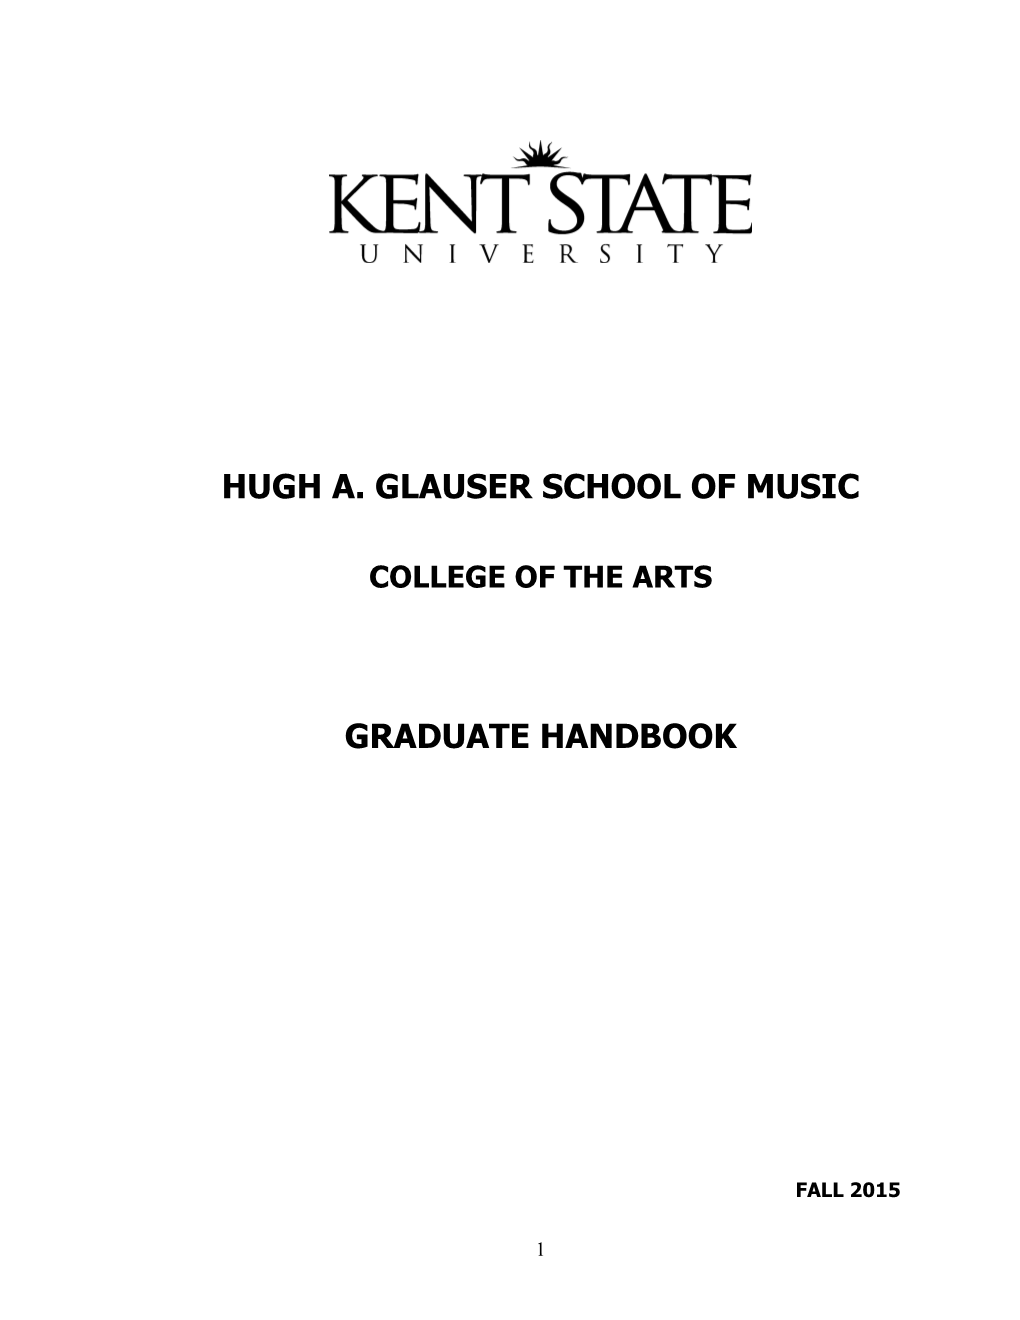 School of Music Graduate Handbook